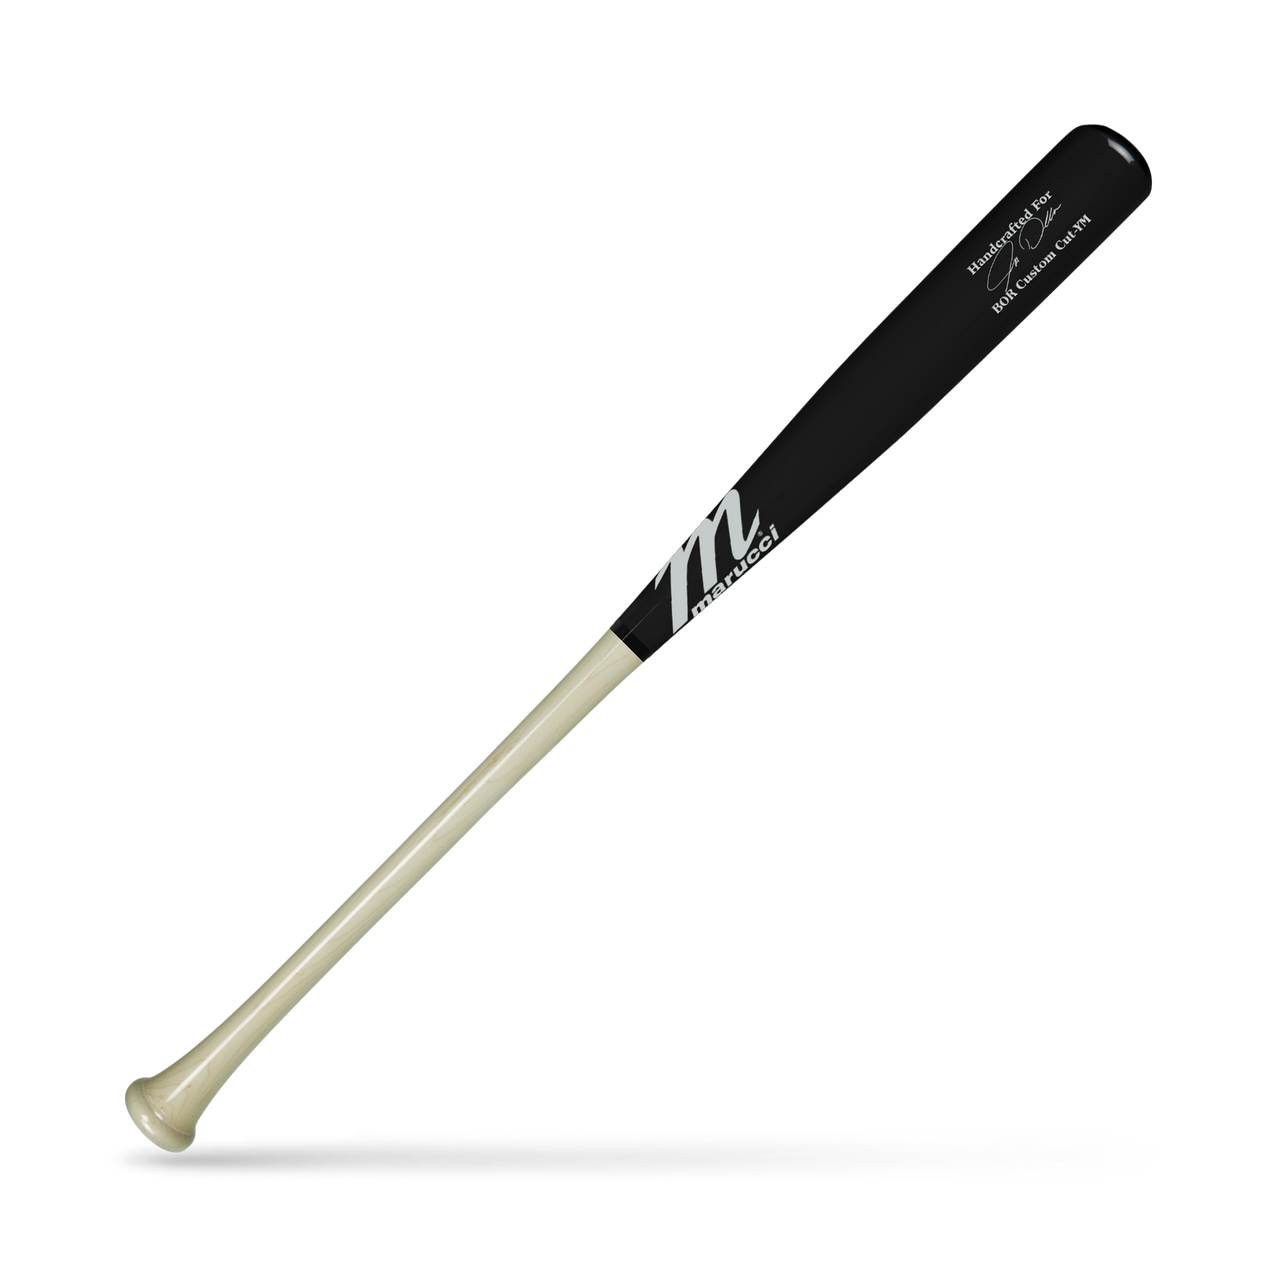 marucci-bringer-of-rain-youth-model-natural-black-wood-baseball-bat-29-inch MYVE3BOR-NBK-29 Marucci  The Marucci Josh Donaldson Bringer of Rain Pro Model Bat is